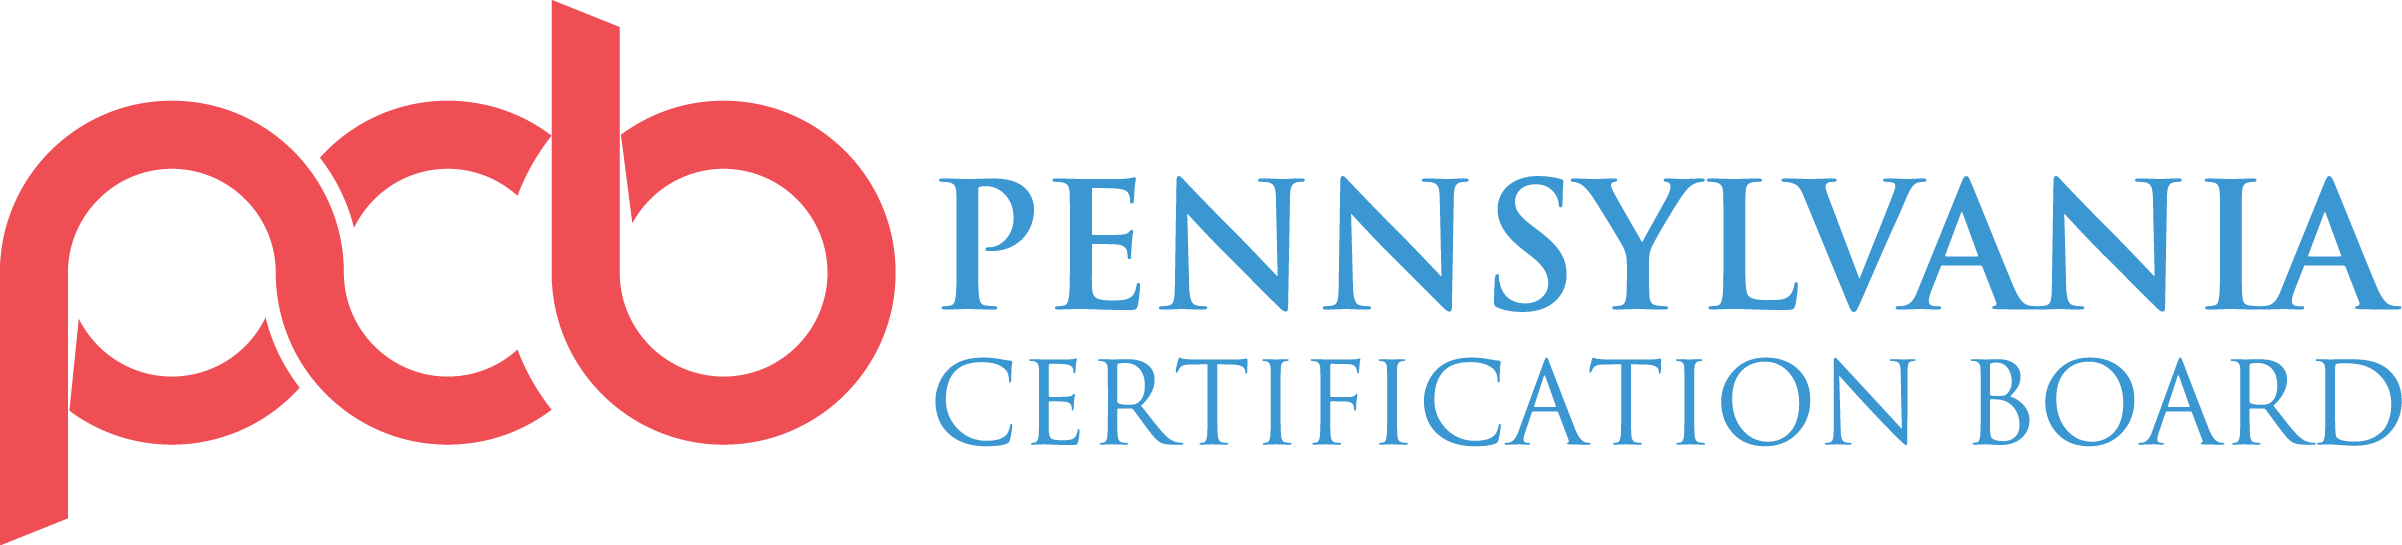 Certifications Pennsylvania Certification Board